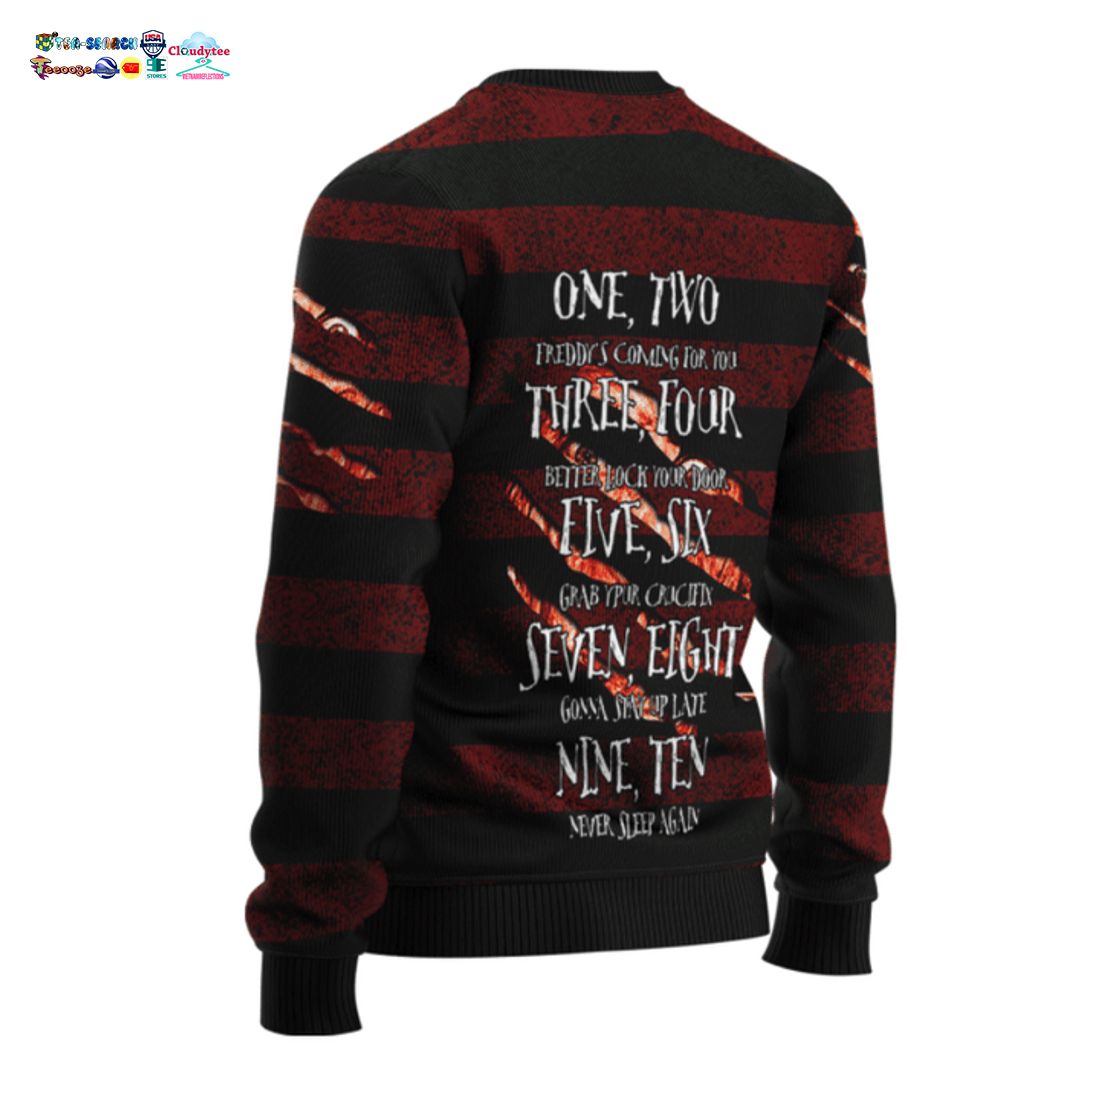 Freddy Krueger Sweet Dreams Ugly Christmas Sweater